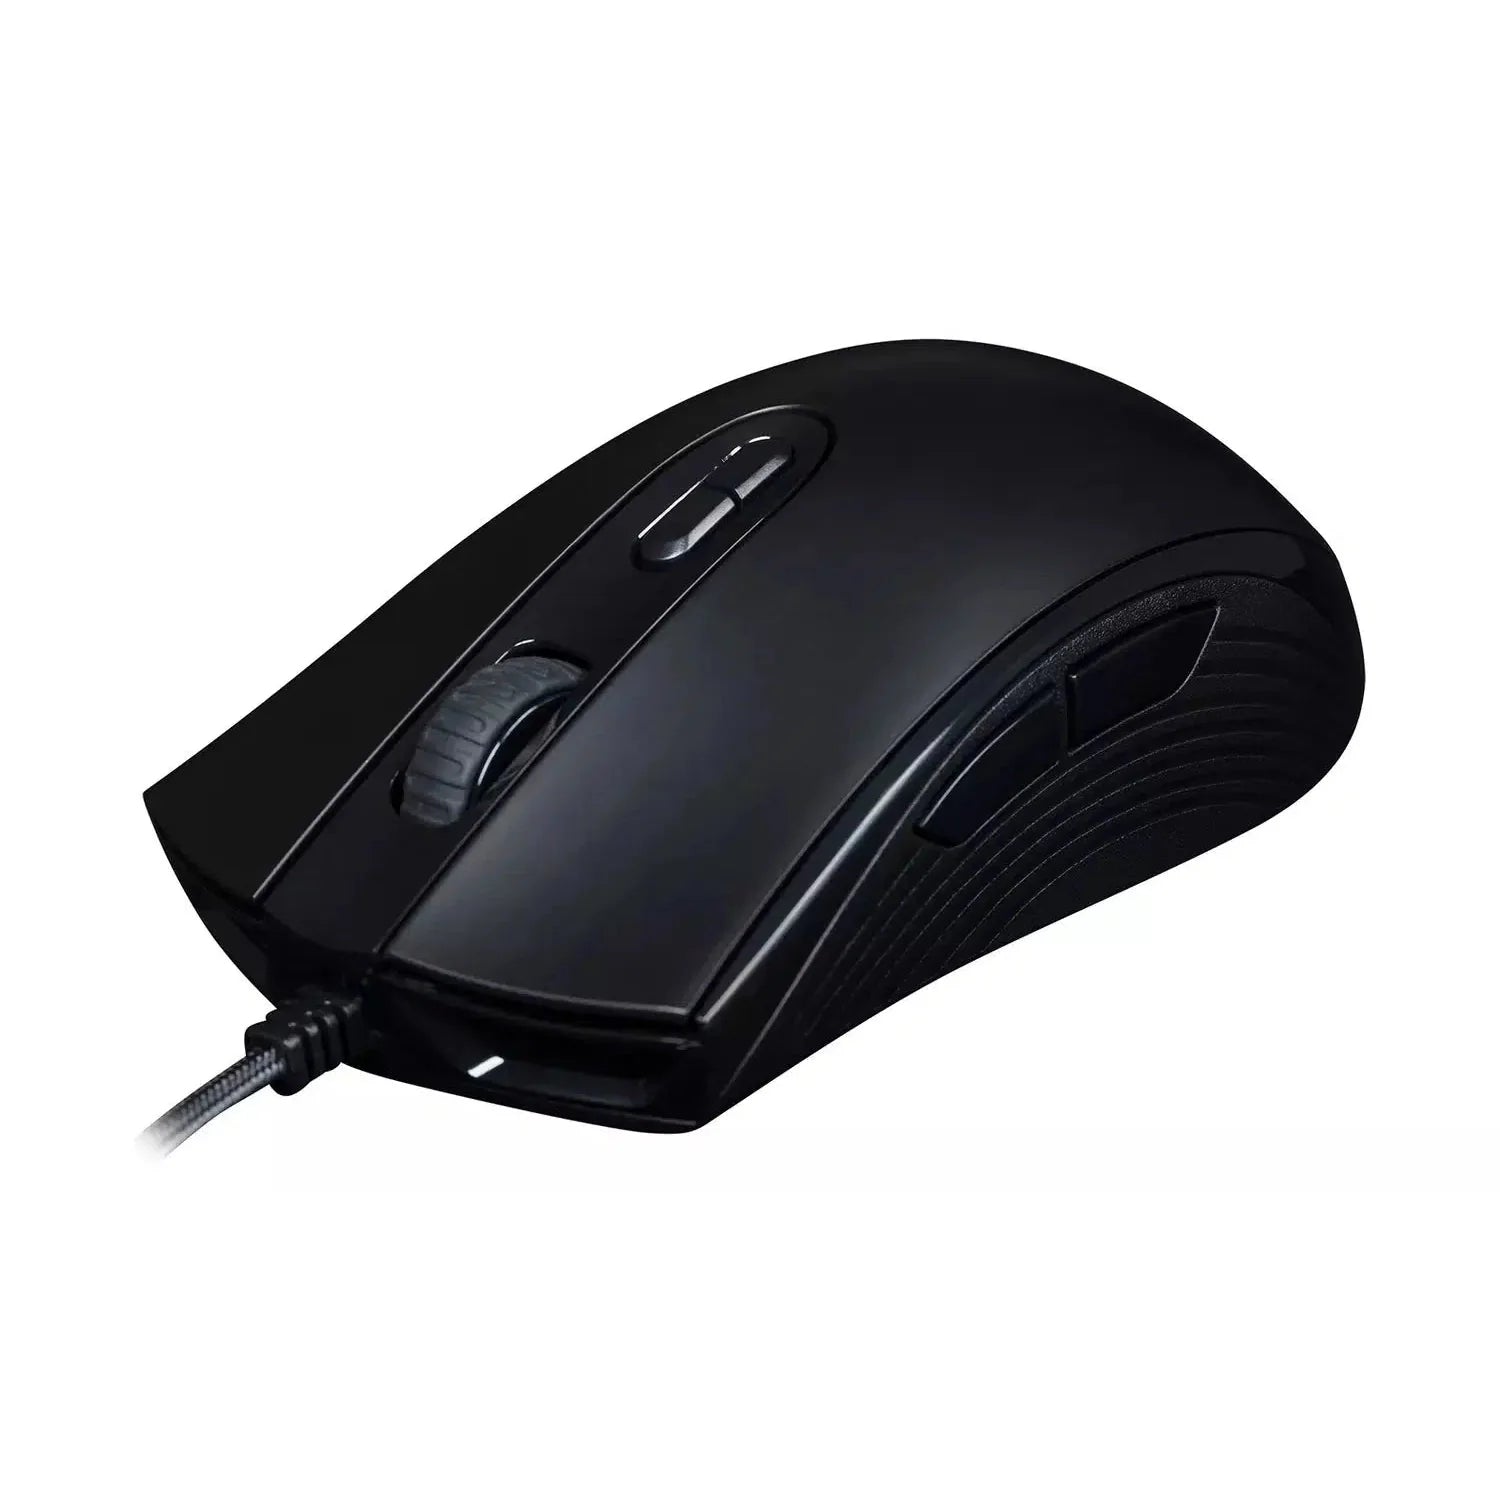 HyperX Pulsefire HX-MC004B Core Wired RGB Gaming Mouse, Black - Refurbished Pristine